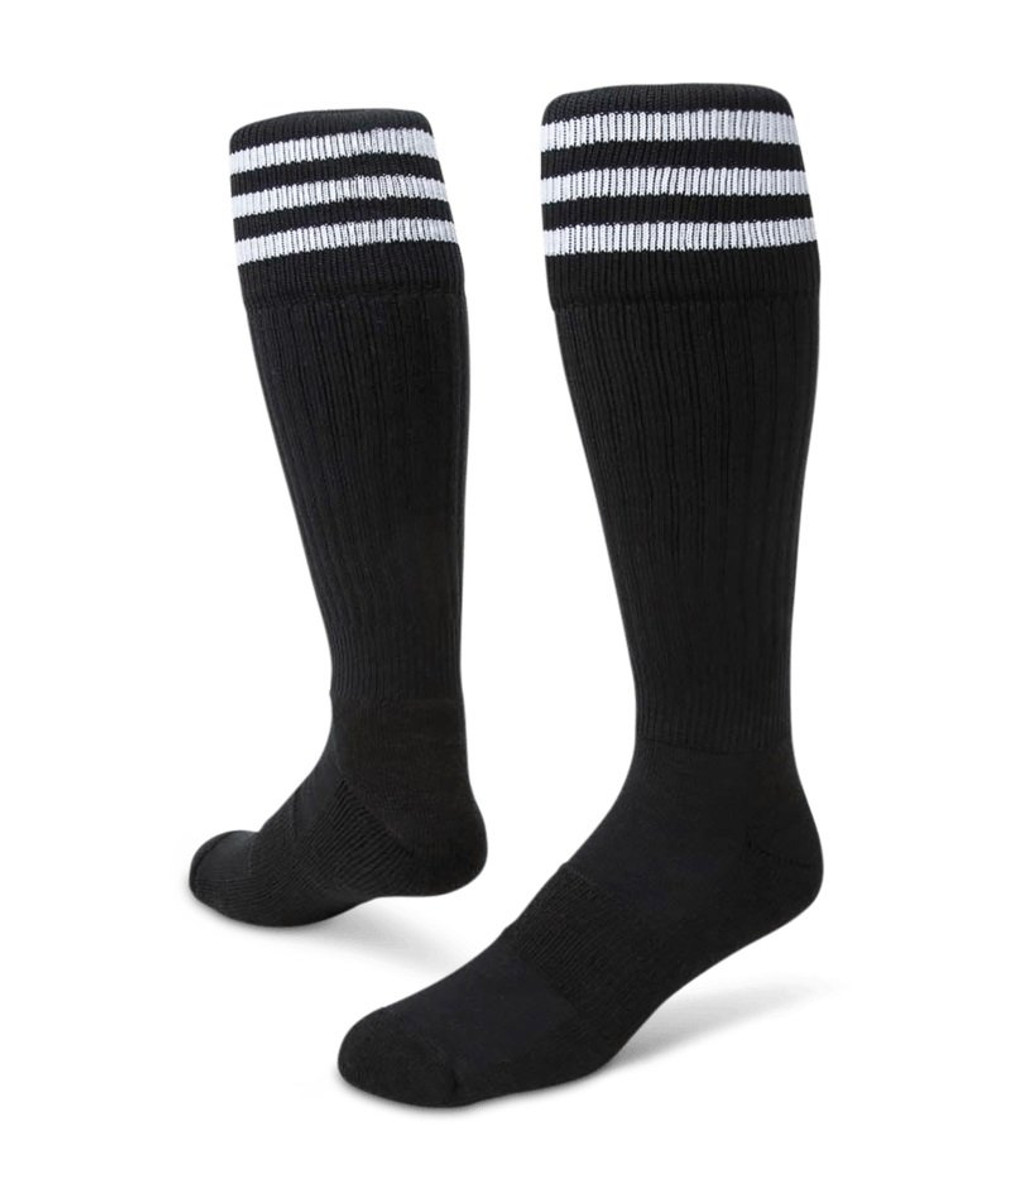 Mach III Knee High Sports Socks - Black White - Medium